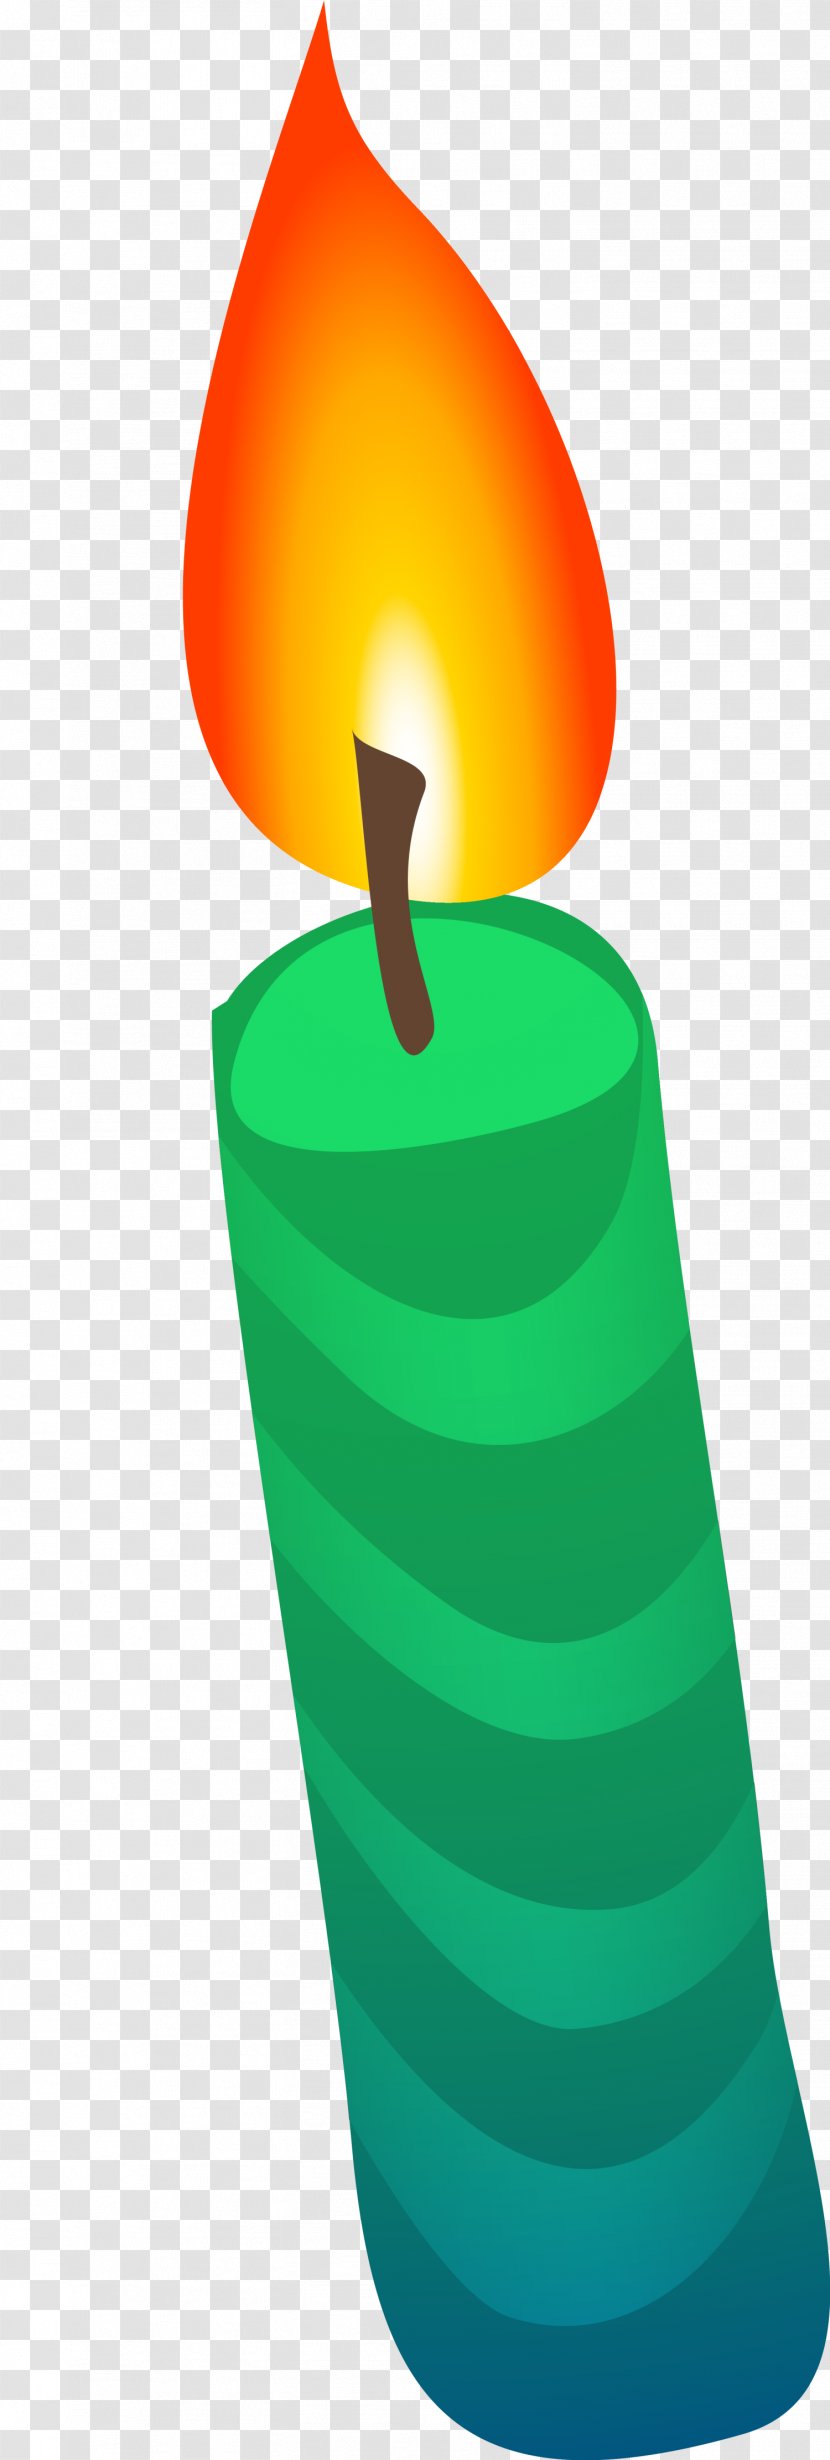 Candlestick Clip Art - Candle - Orange Simple Transparent PNG